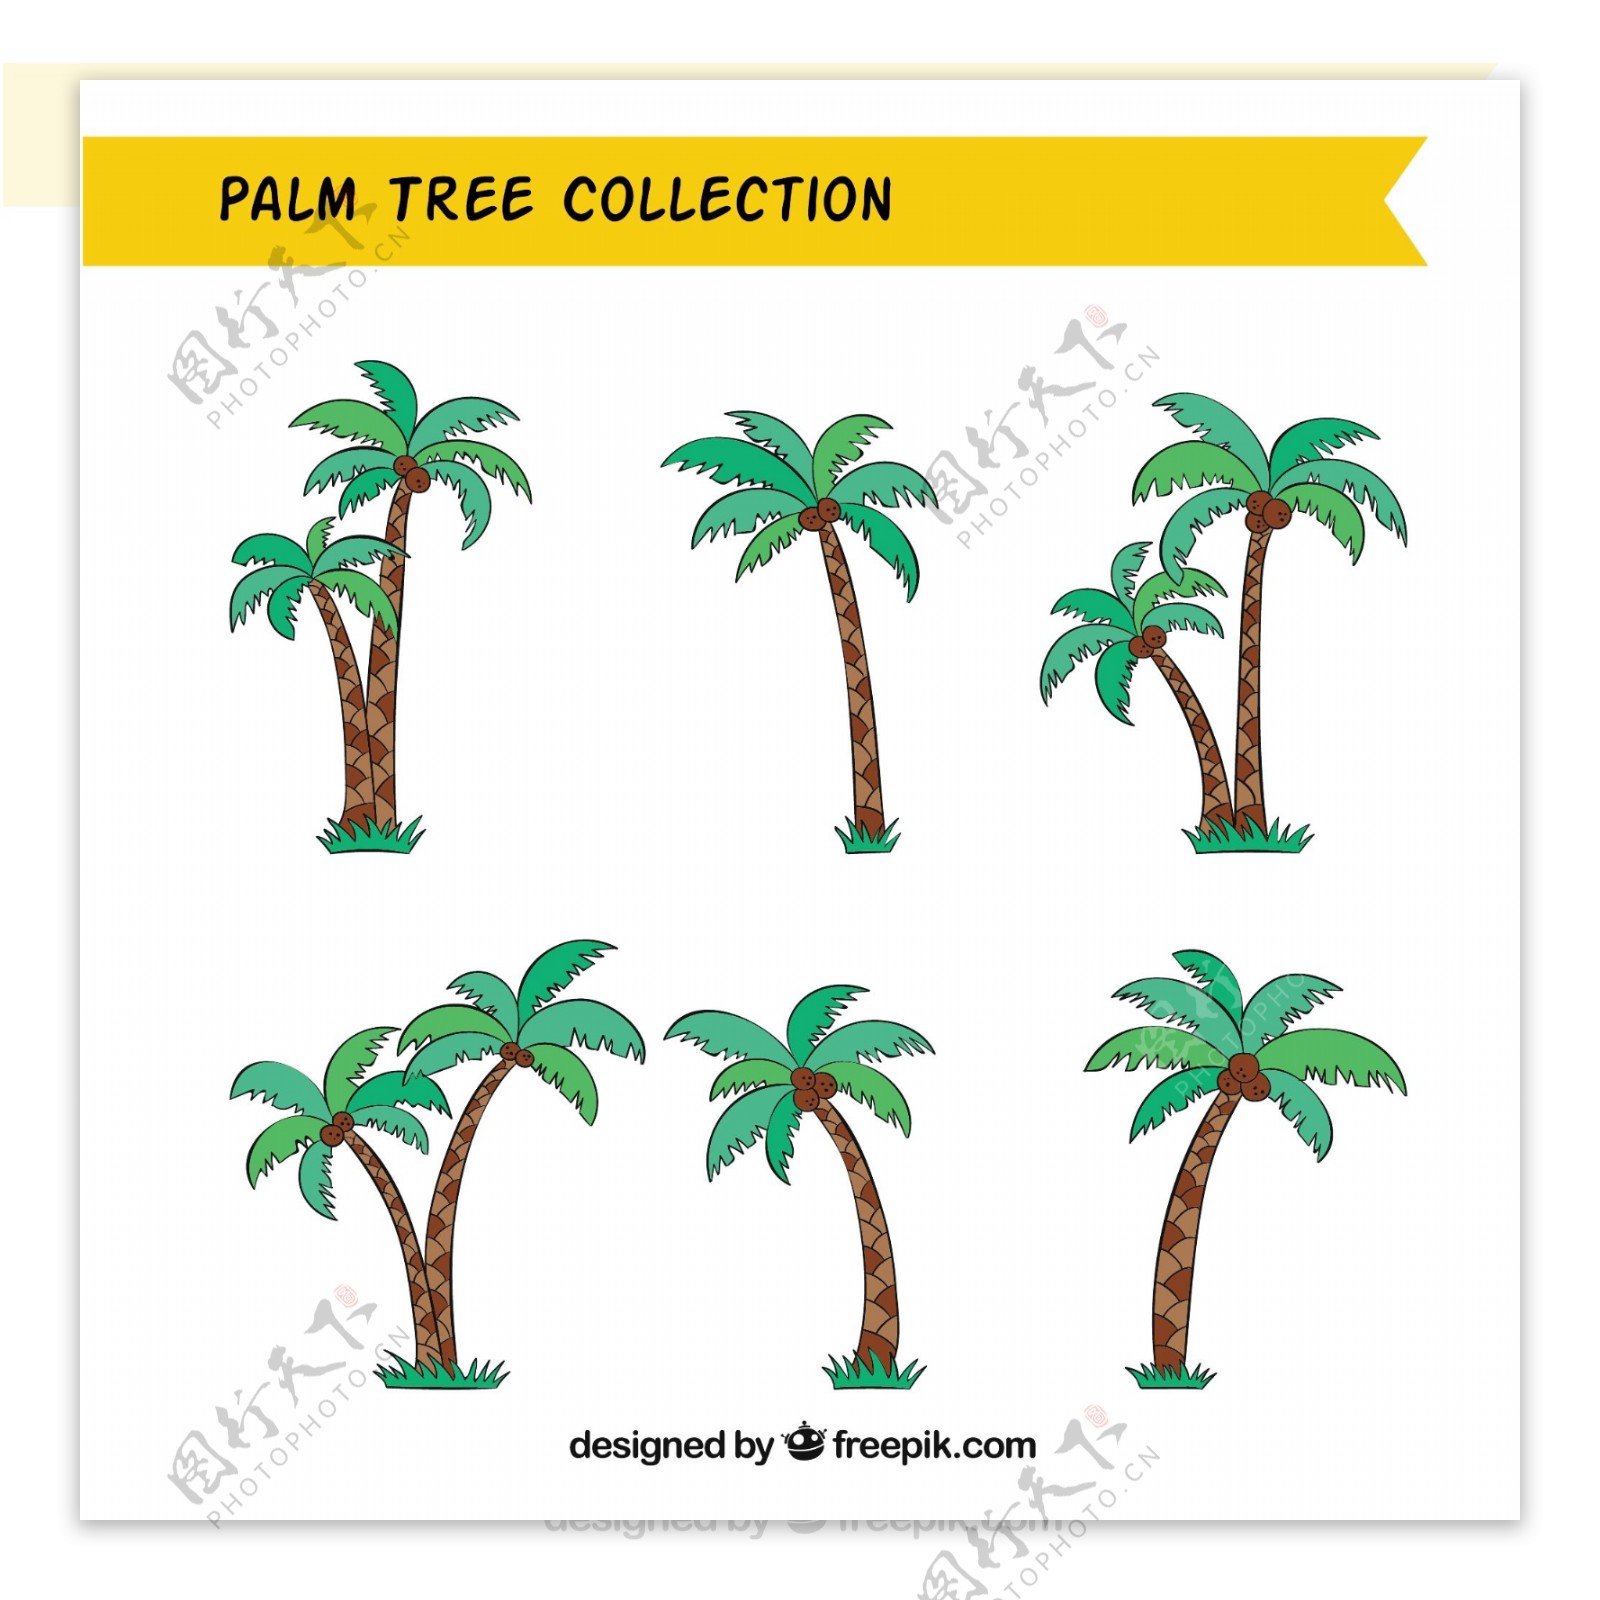 各种棕榈椰子树